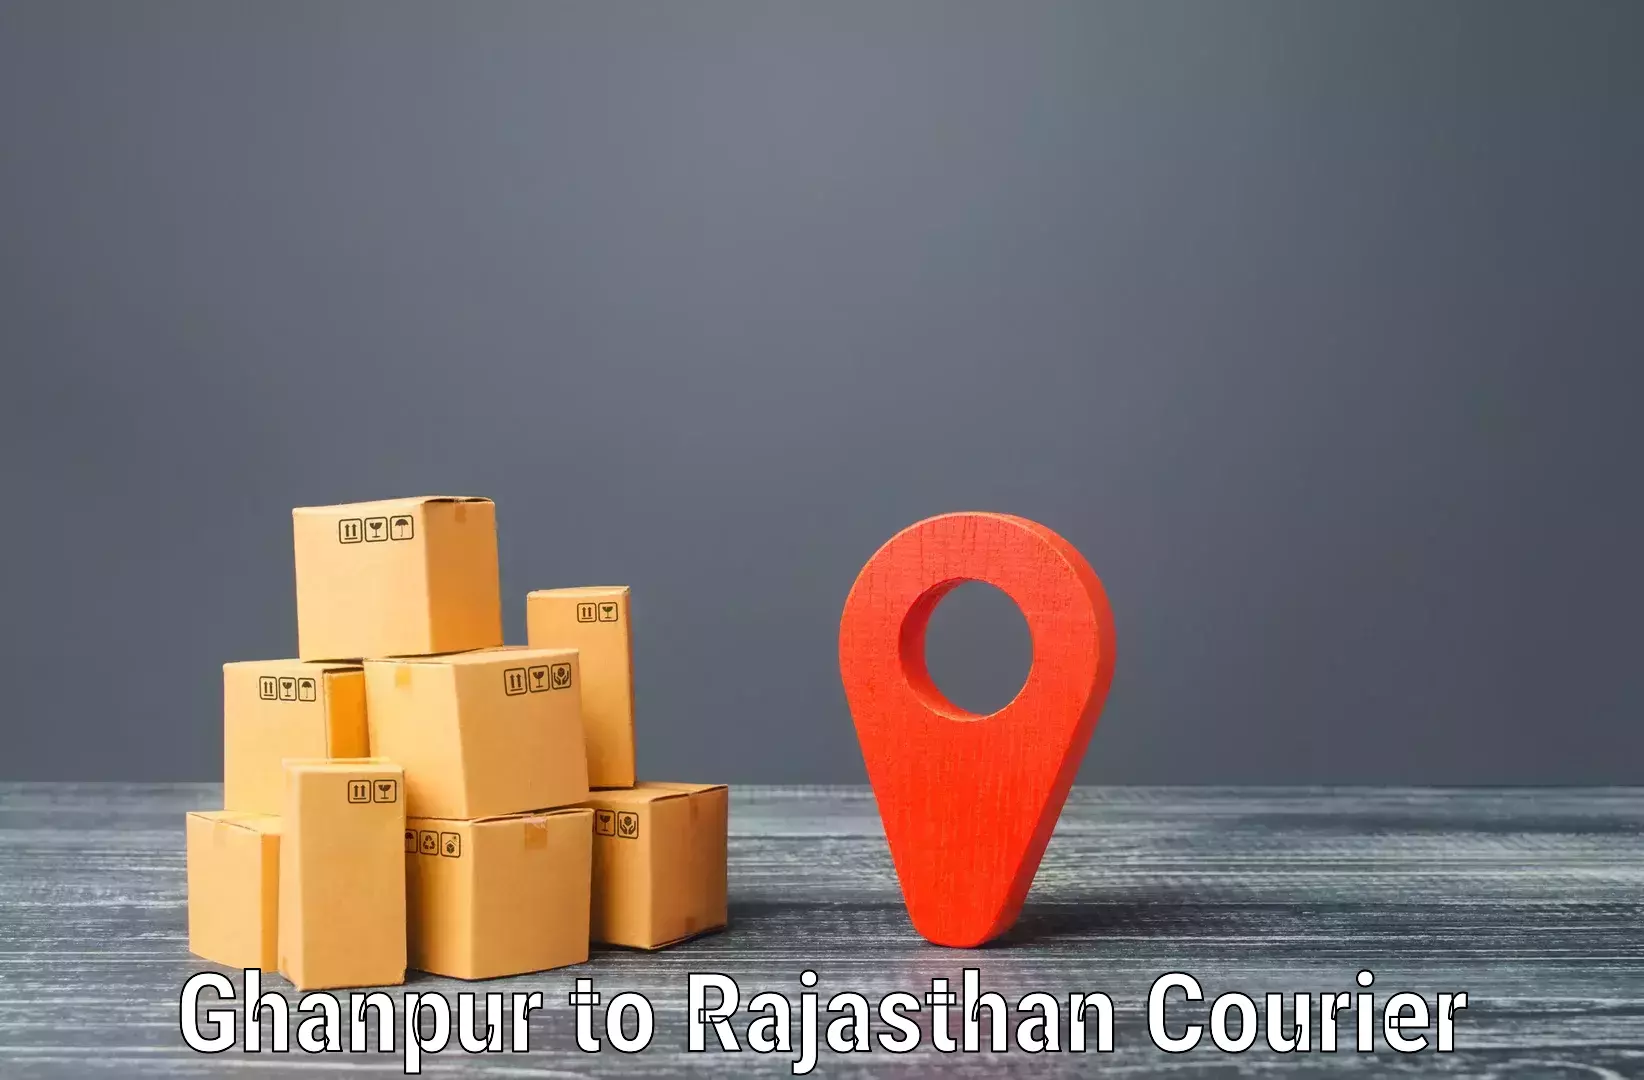 Courier service comparison Ghanpur to Khatu Khurd